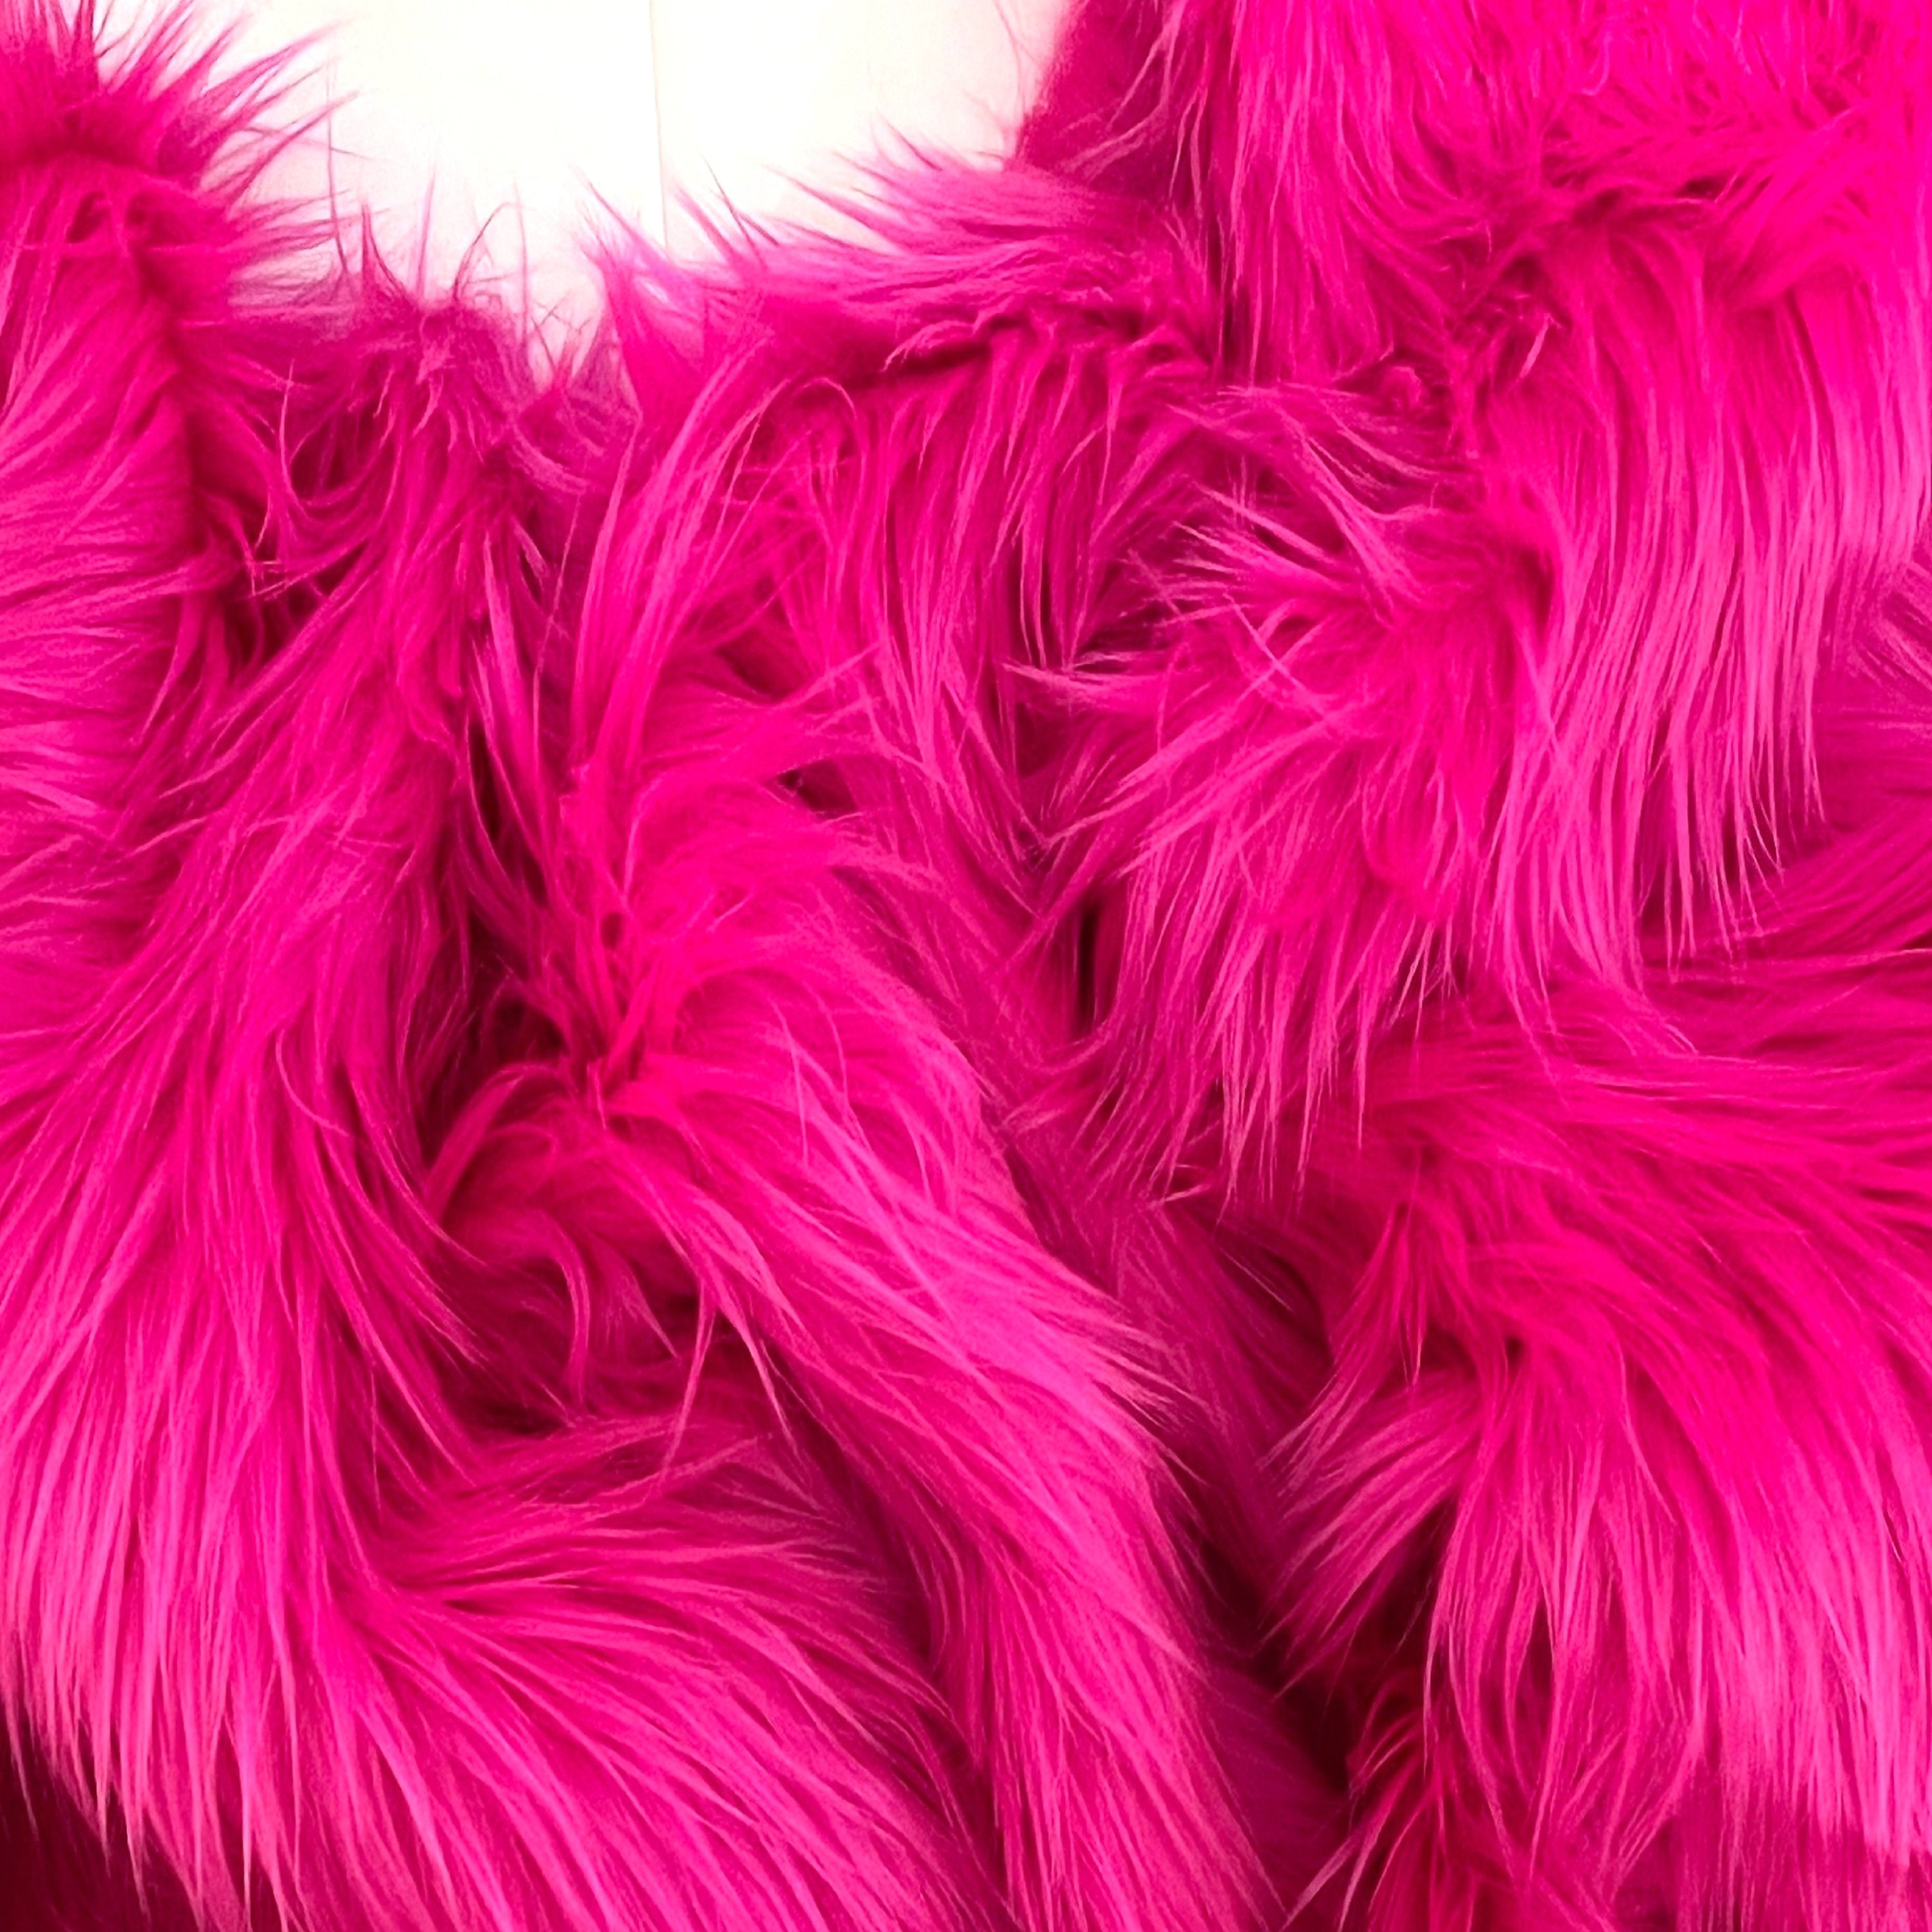 UV Hot Pink Luxury Shag Faux Fur | Howl Fabric